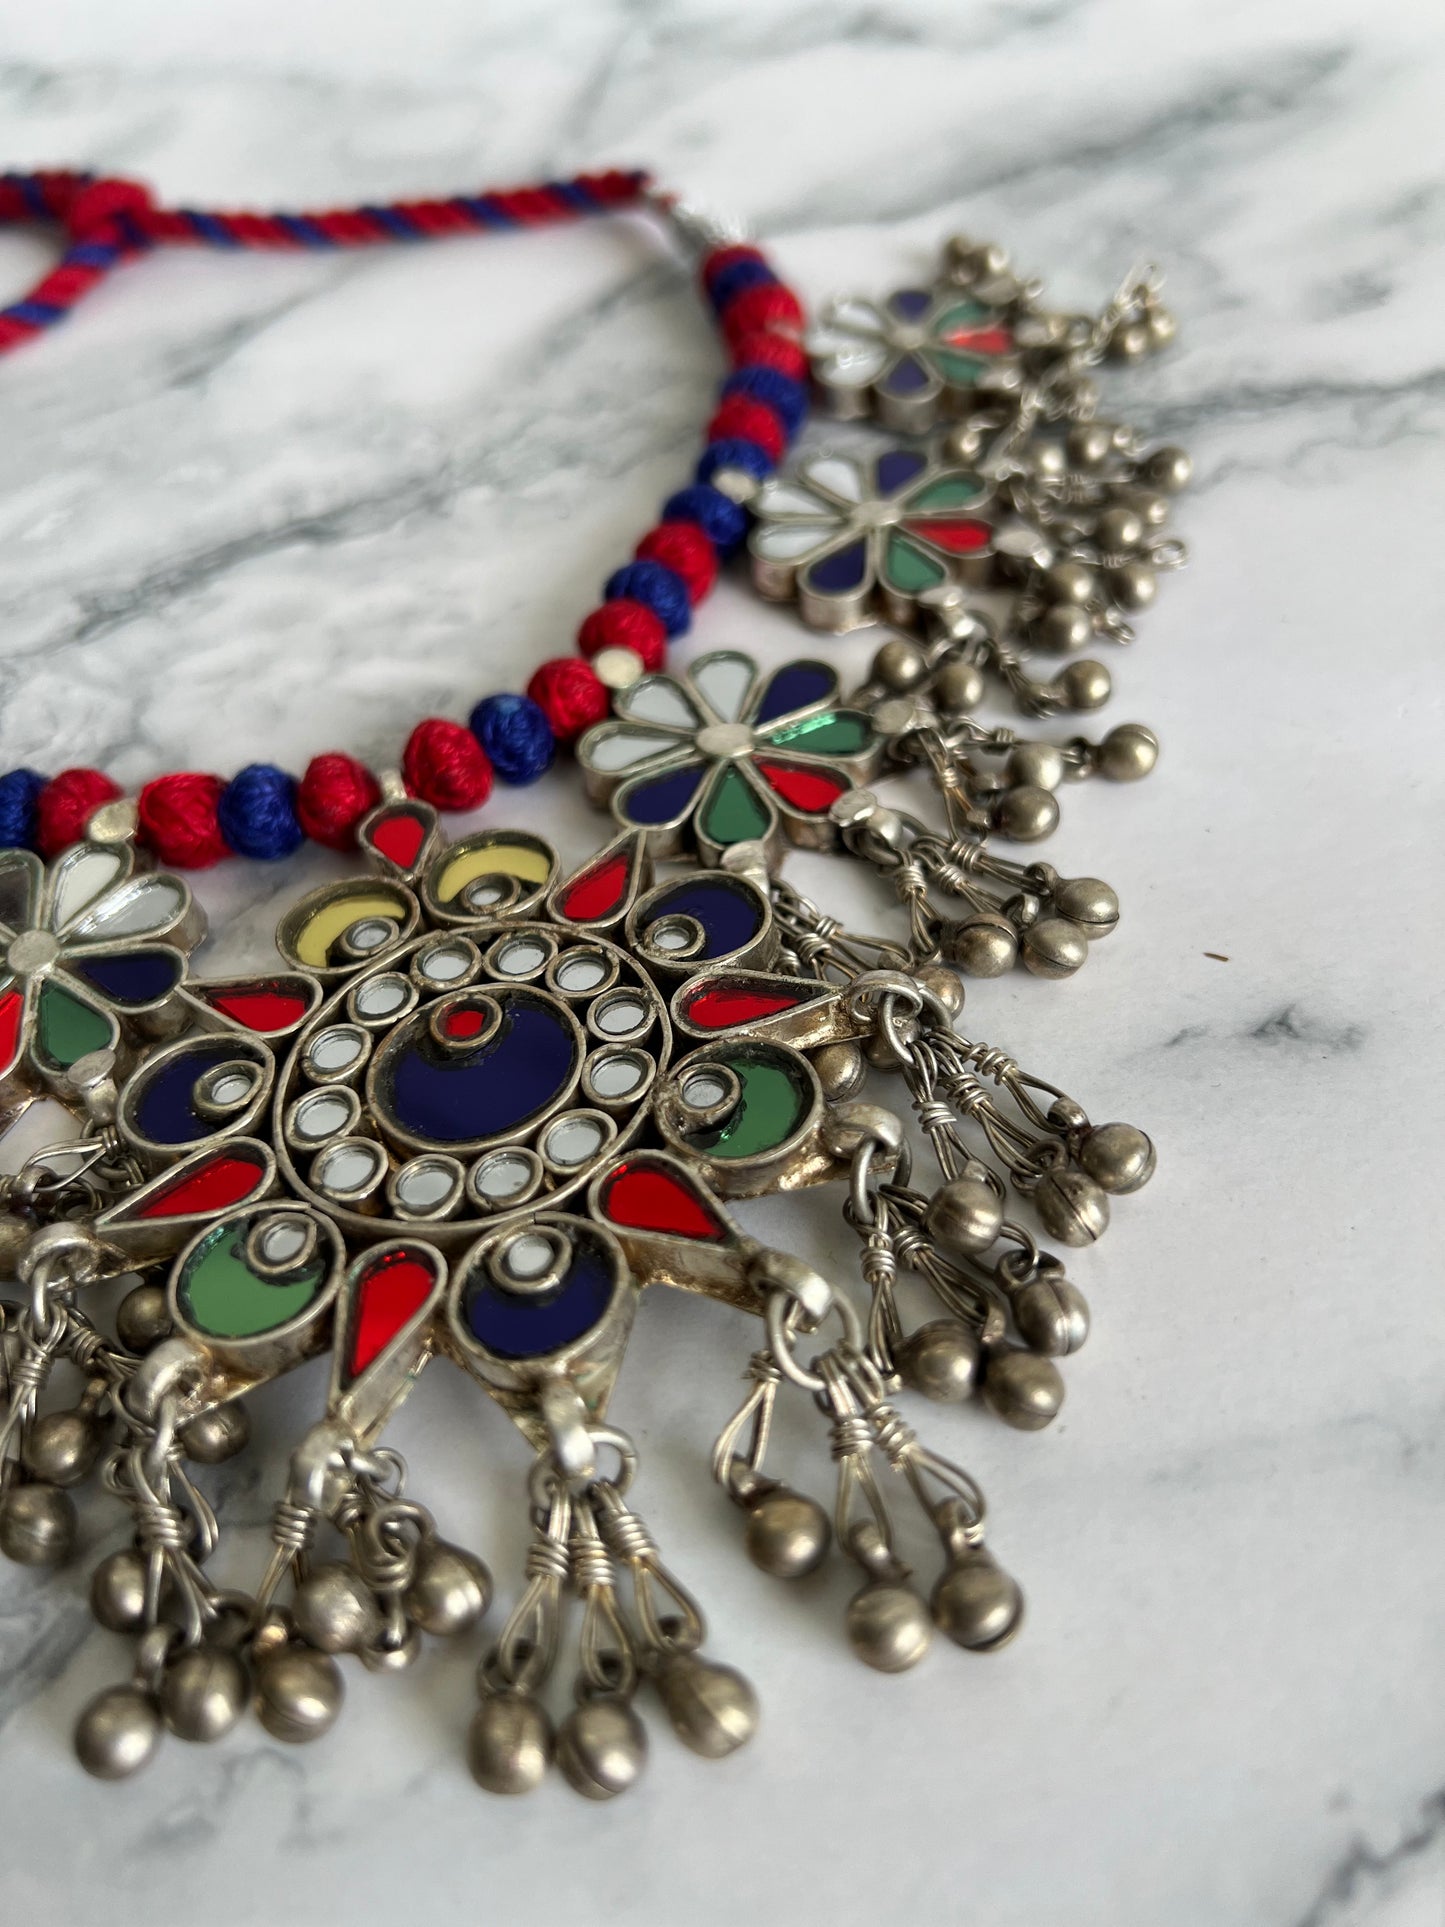 Maqbool Glass Necklace